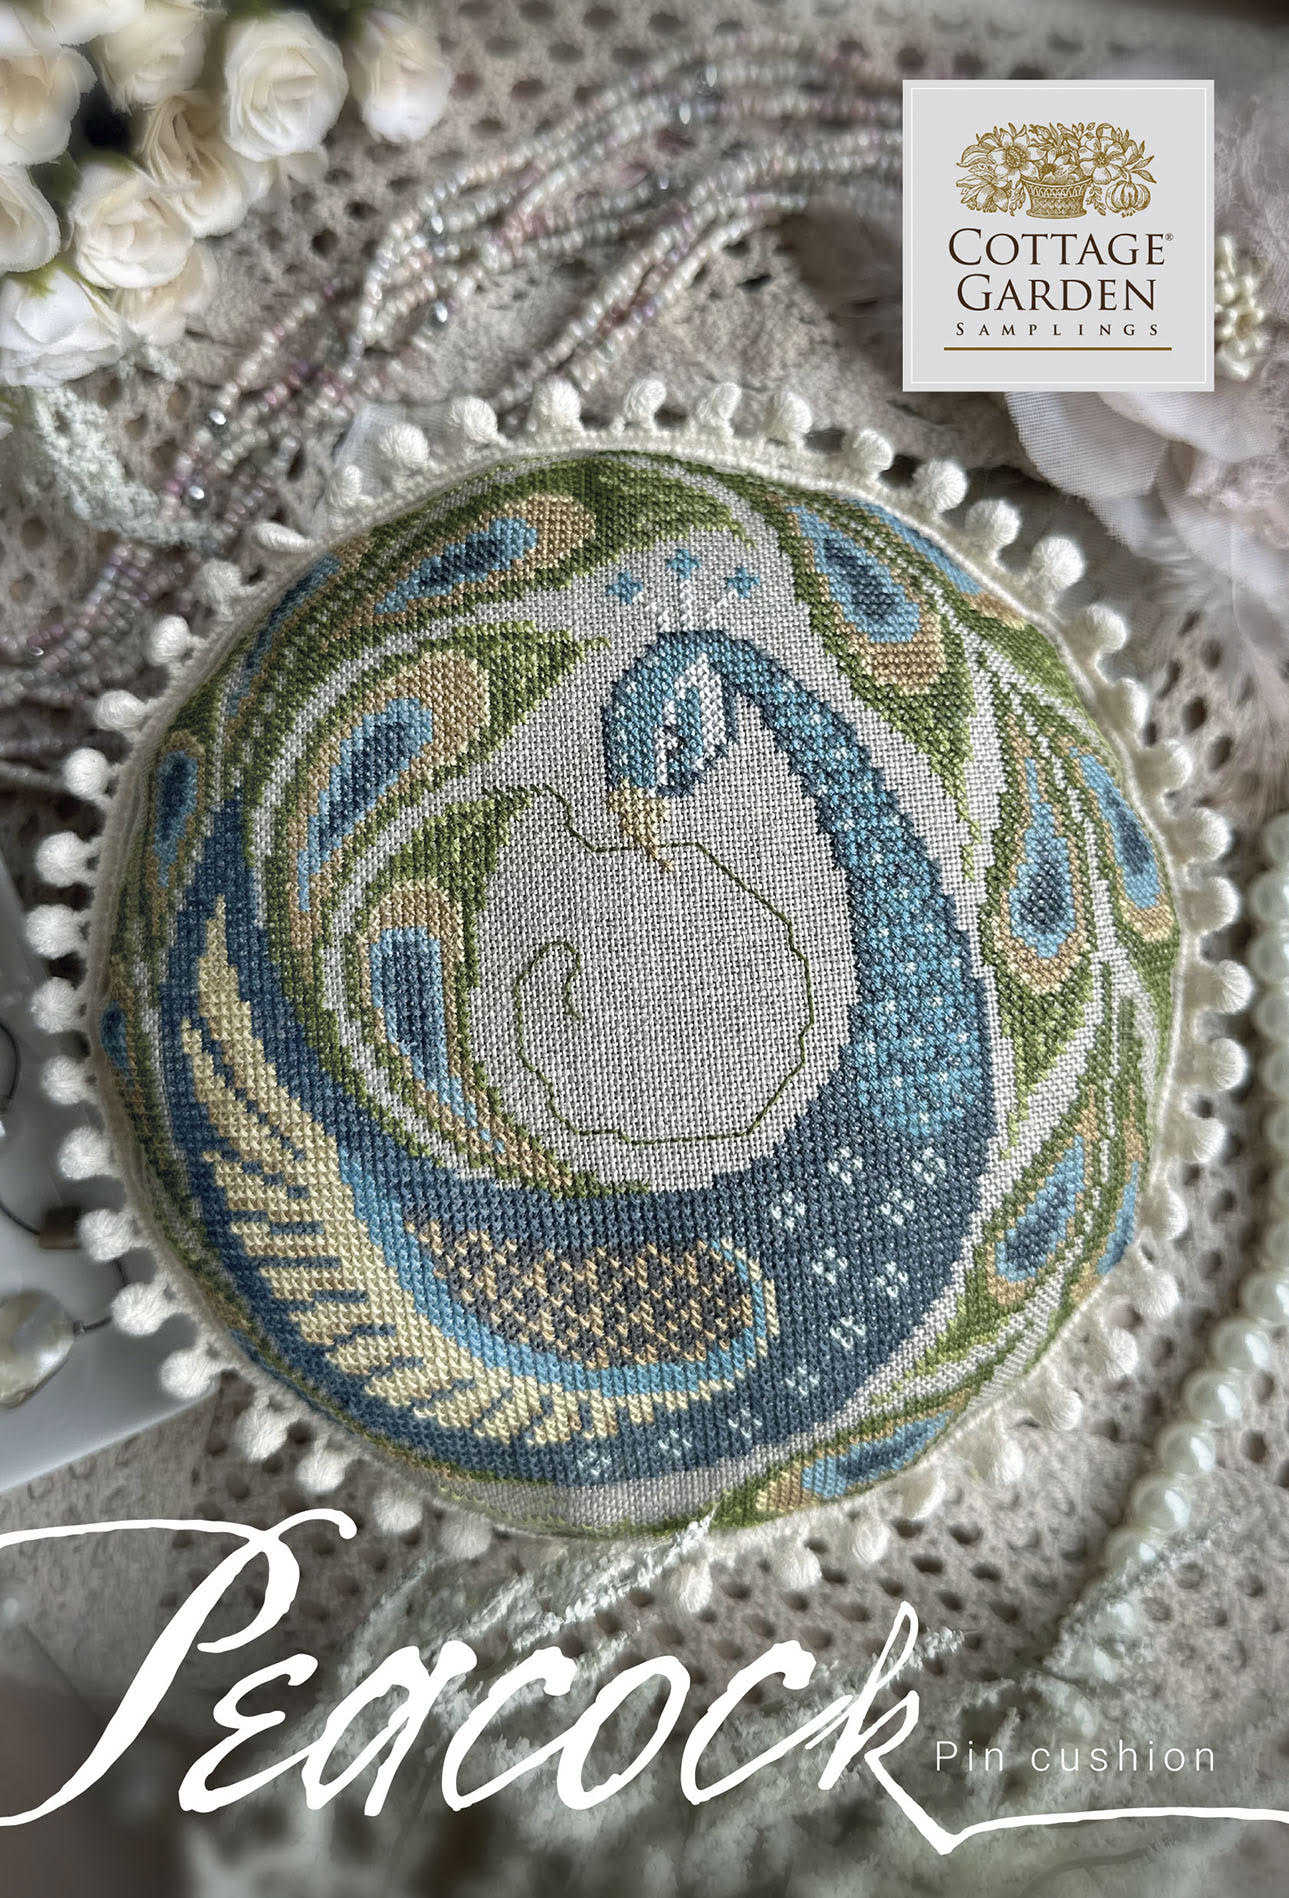 Peacock Pin Cushion | Cottage Garden Samplings